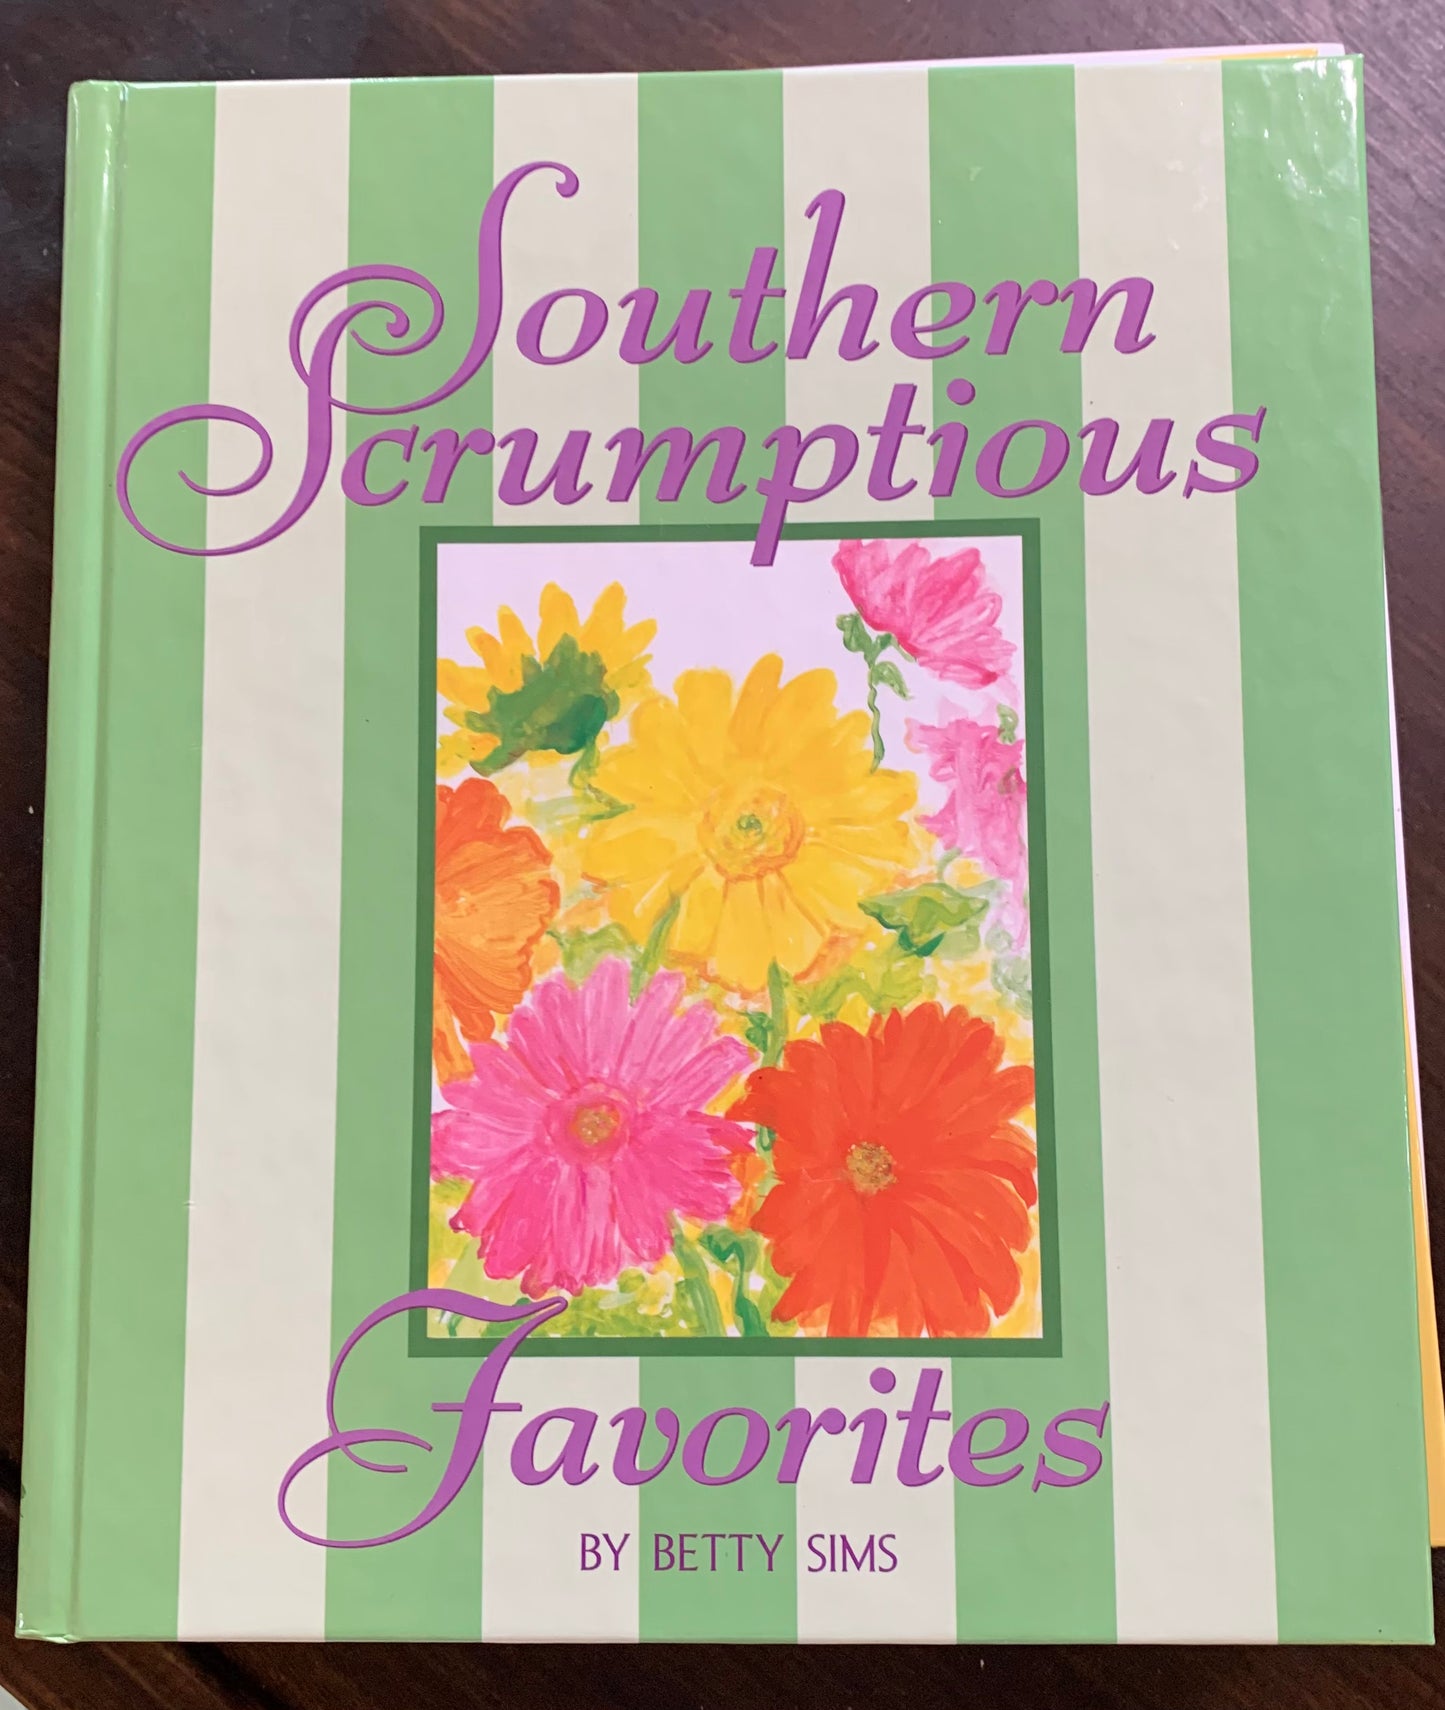 Southern Scrumptious Favorites